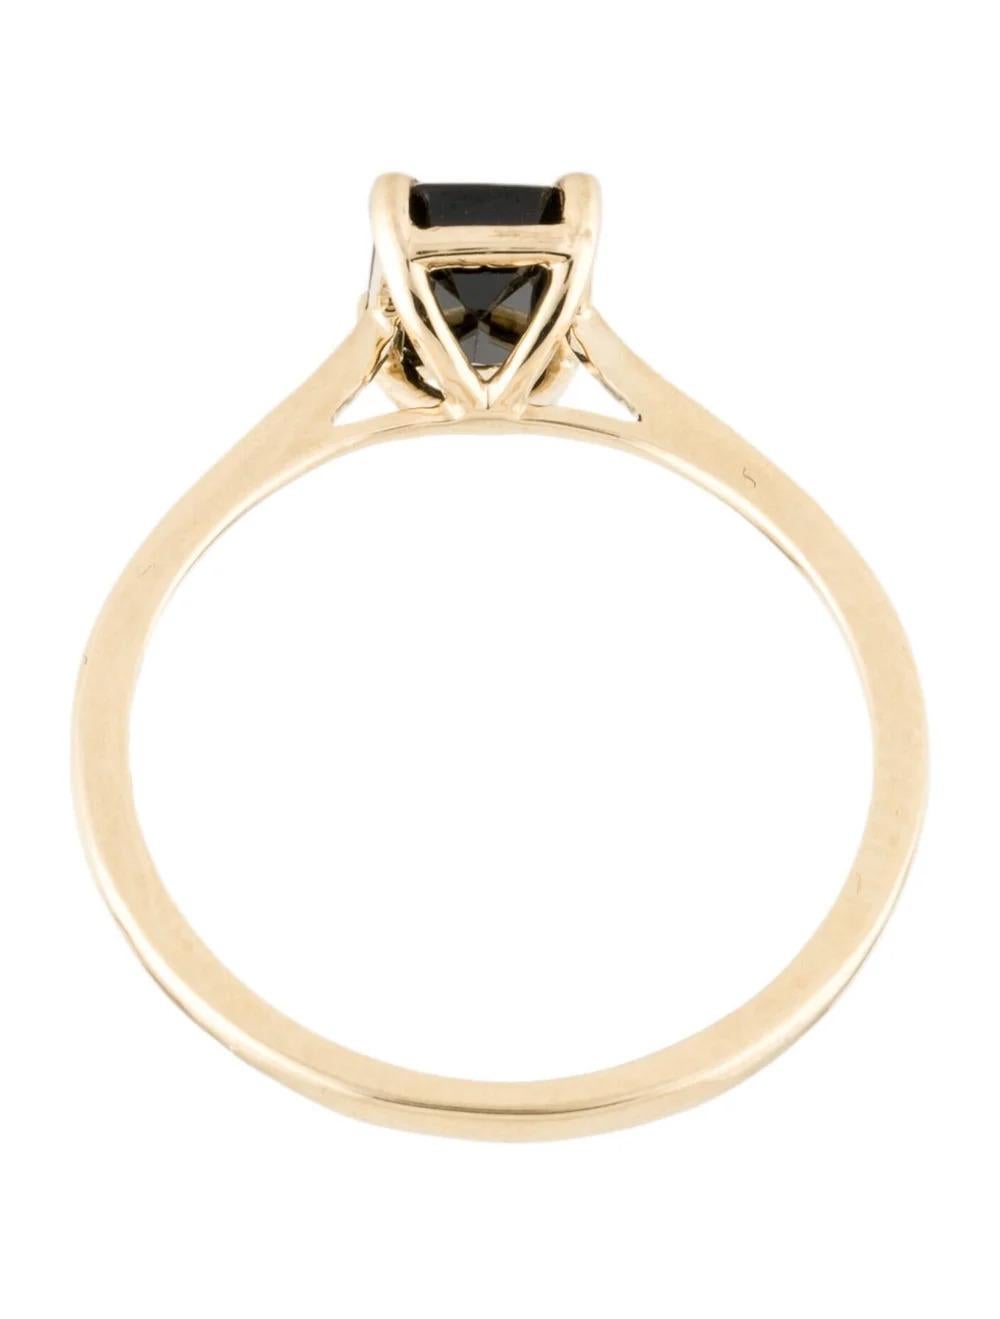 Women's Designer 14K Sapphire Cocktail Ring - 1.04ct, Size 7, Gemstone Statement Jewelry For Sale